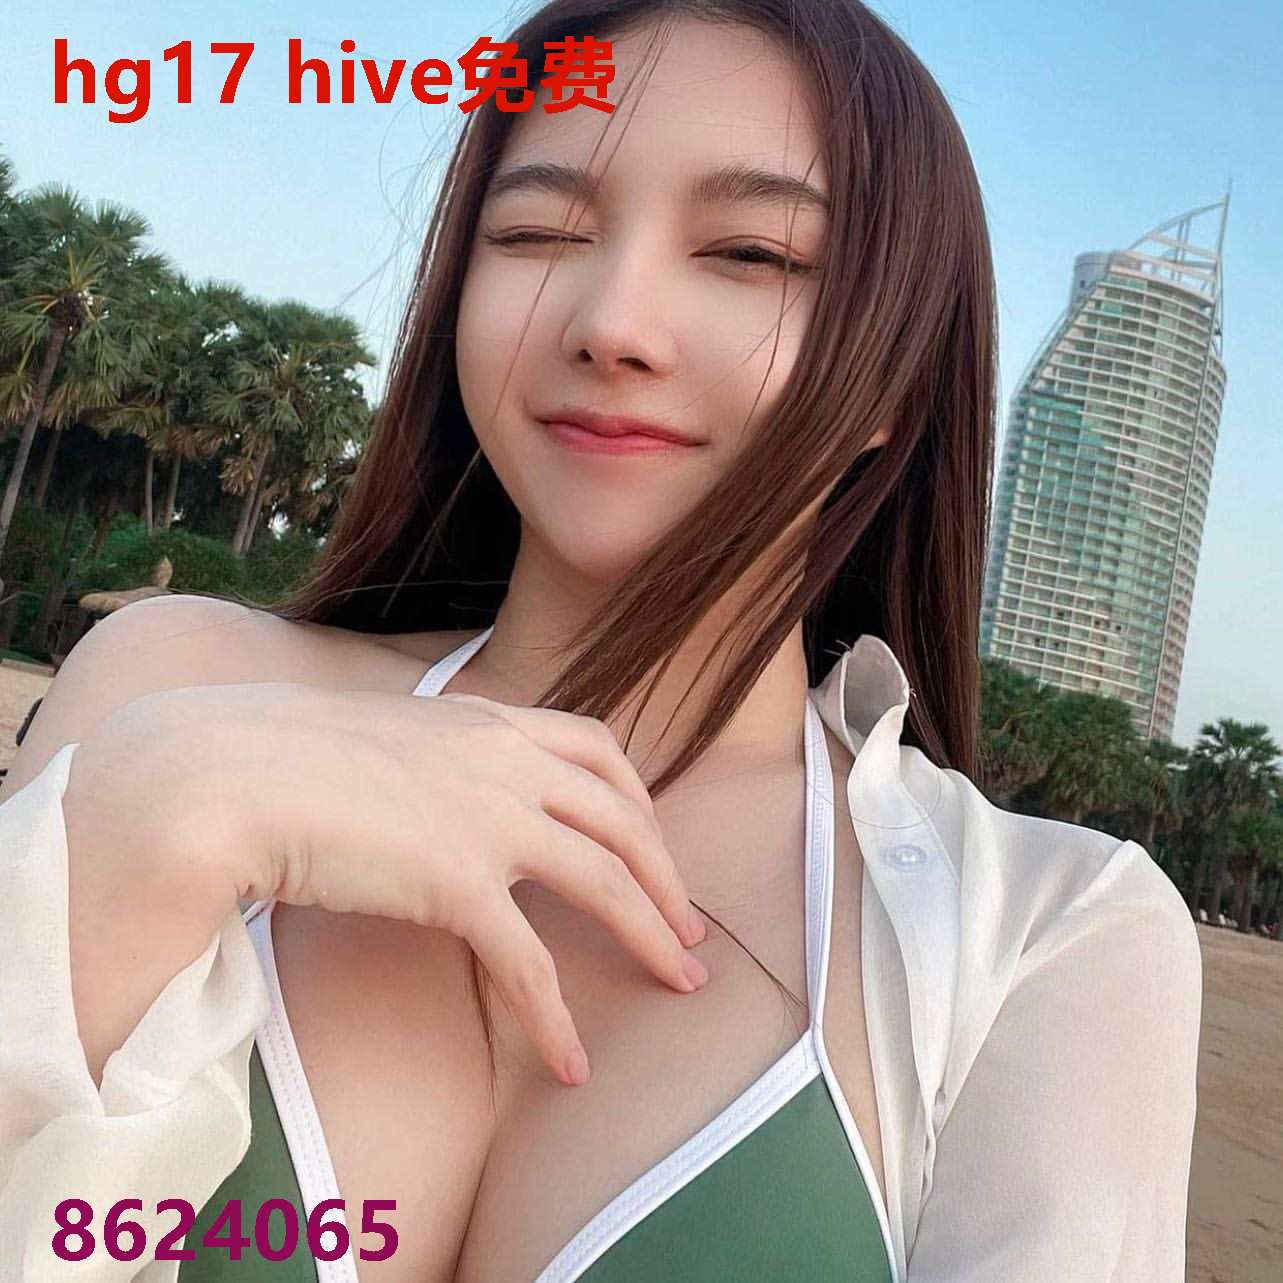 hg17 hive免费